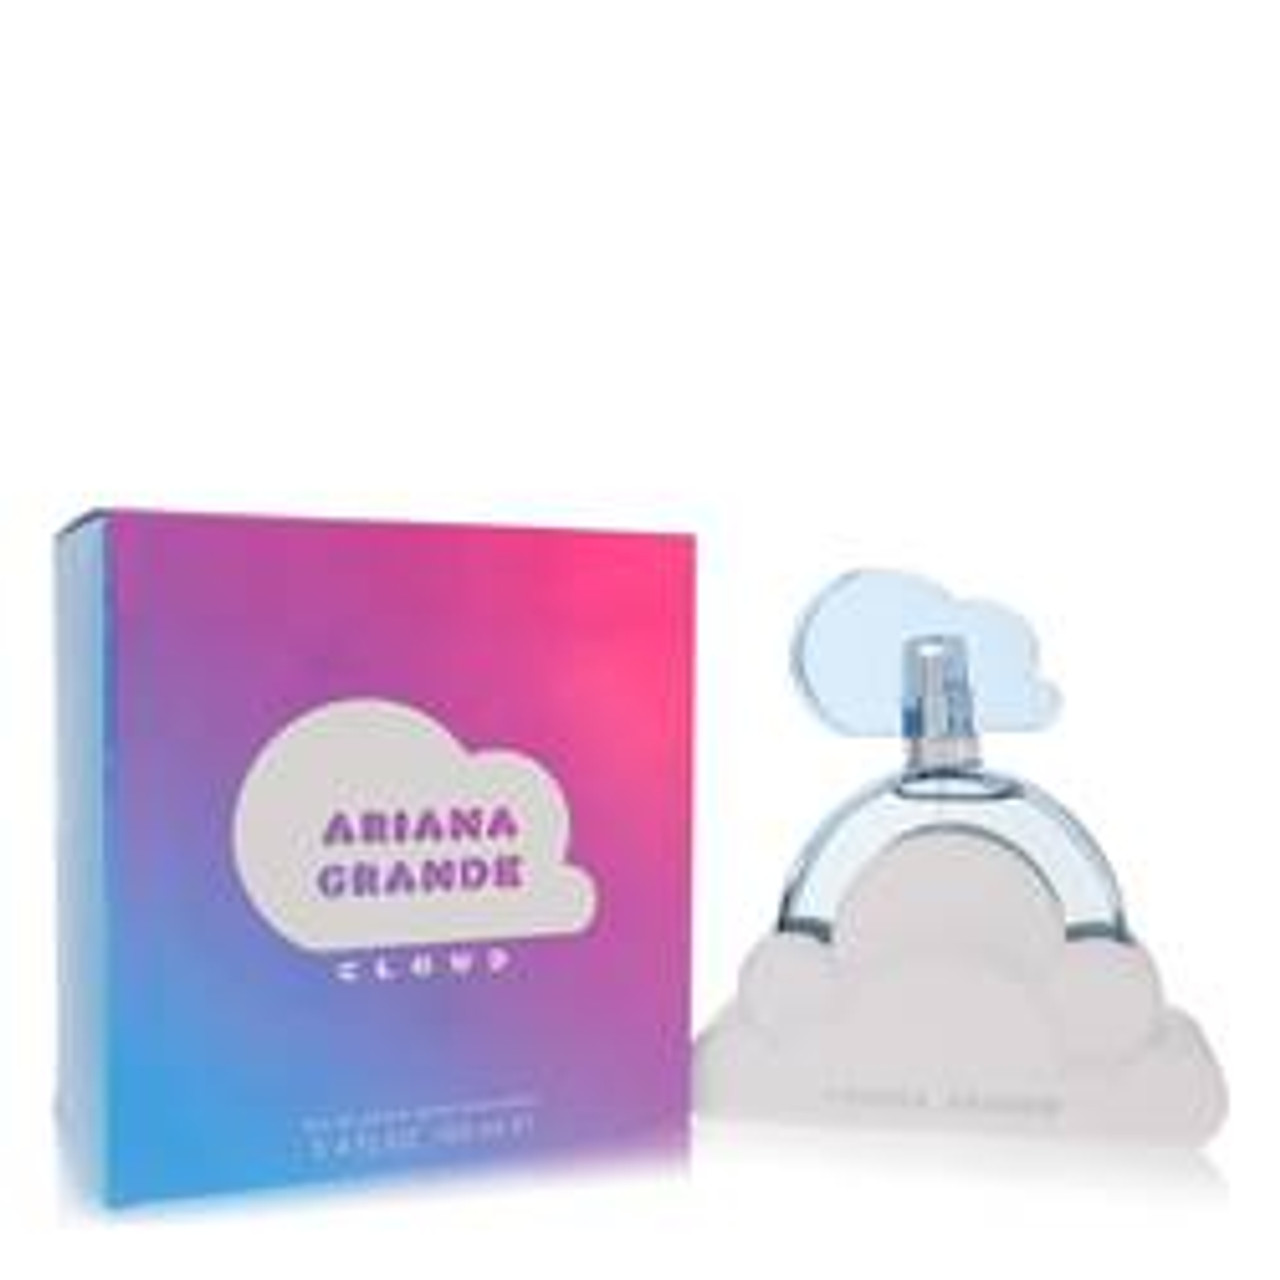 Ariana Grande Cloud Perfume By Ariana Grande Eau De Parfum Spray 3.4 oz for Women - *Pre-Order